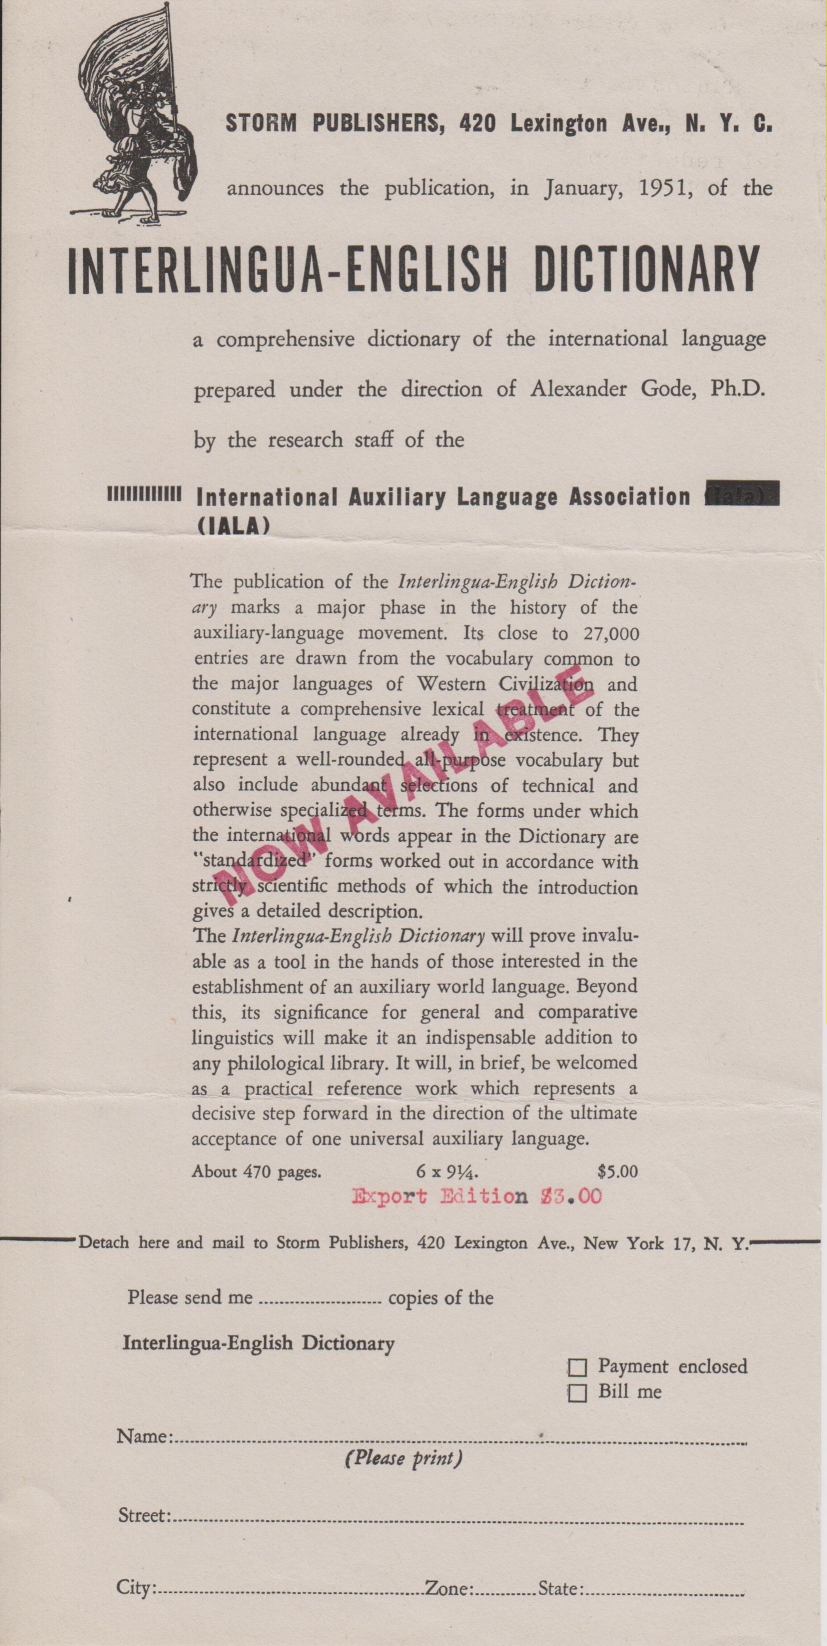 Reclamo pro le publication del "Interlingua-English Dictionary" in januario 1951